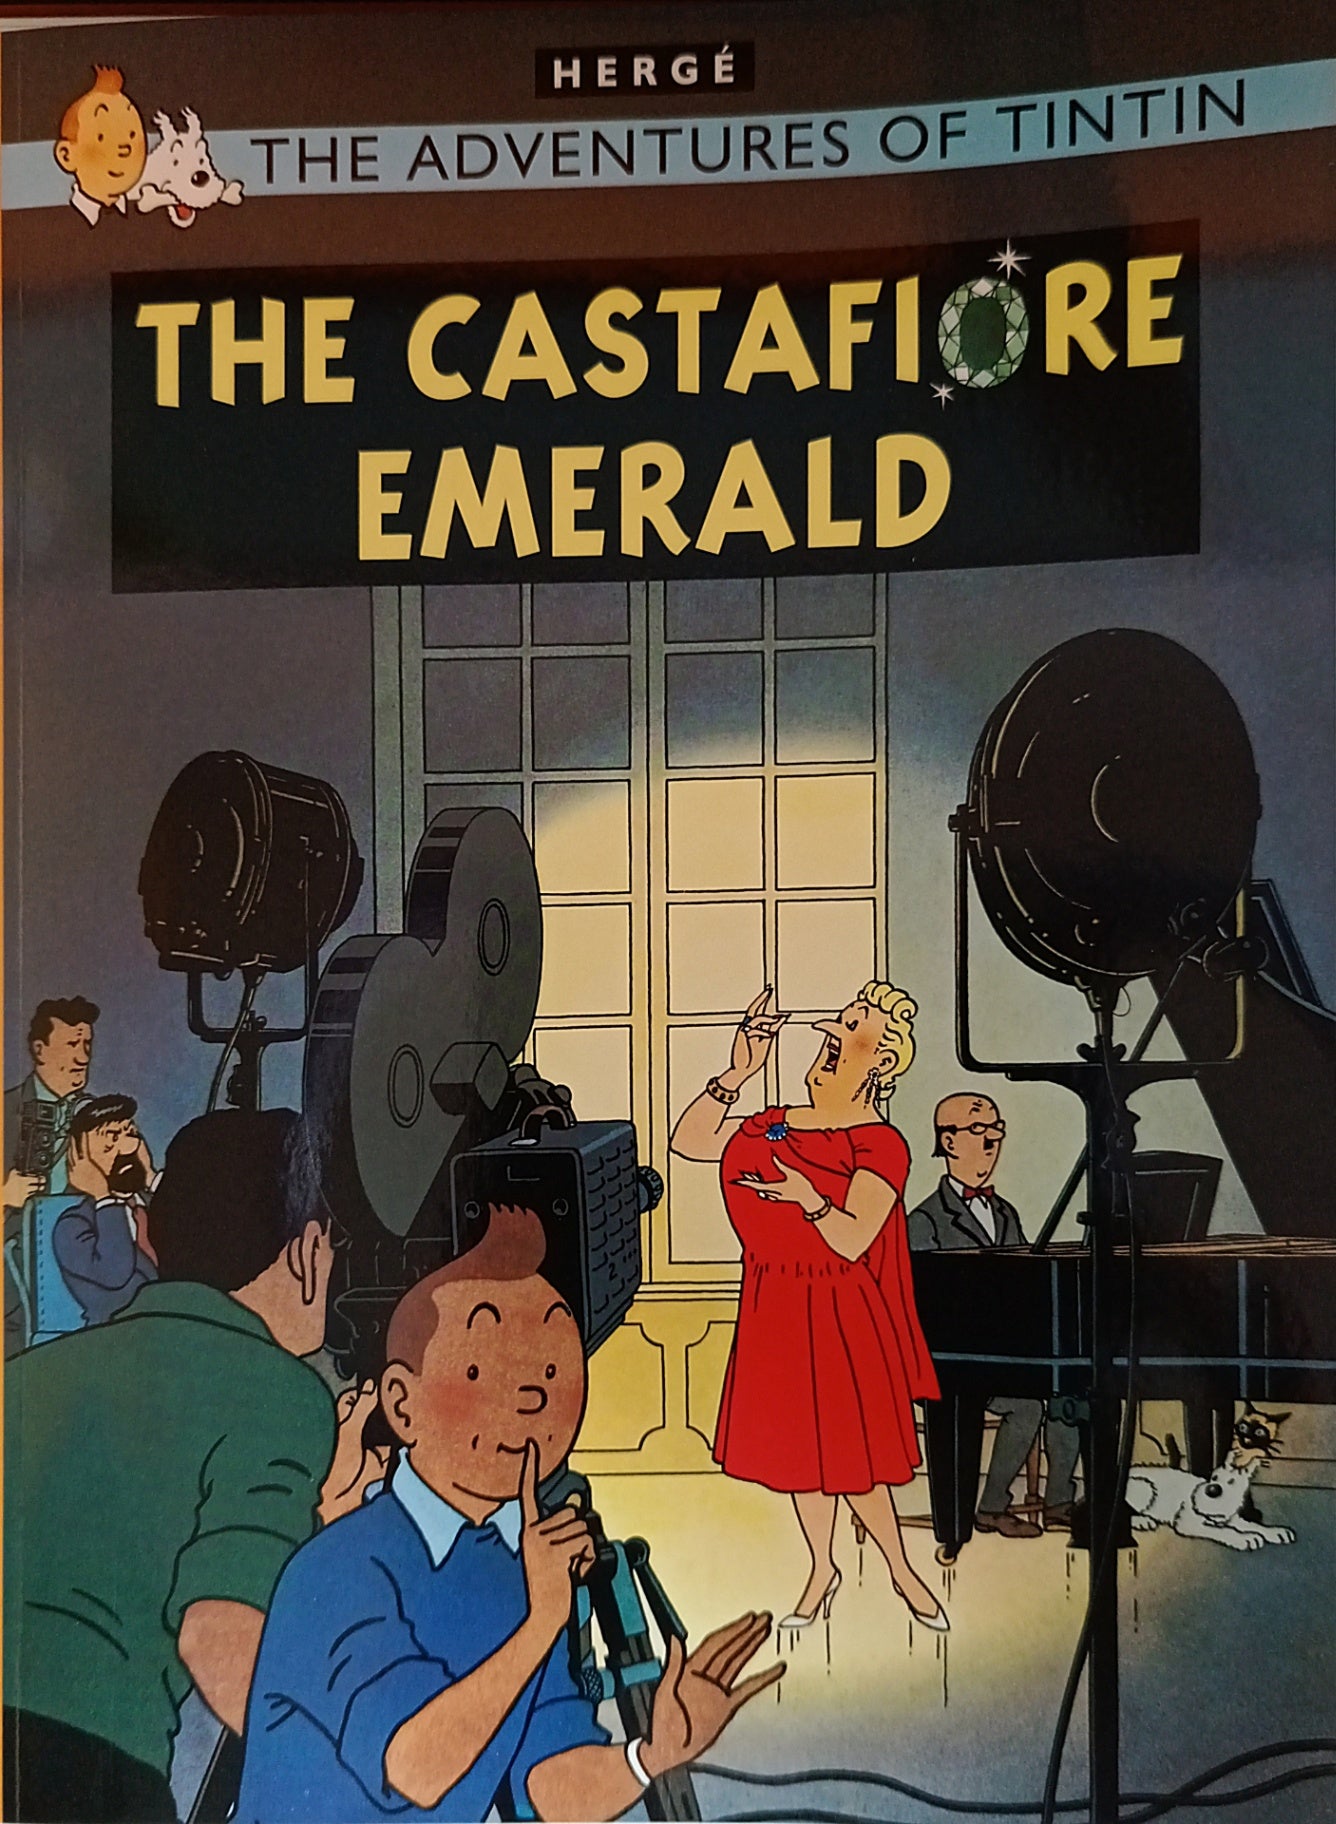 The Adventures of Tintin-The Castaflore Emerald